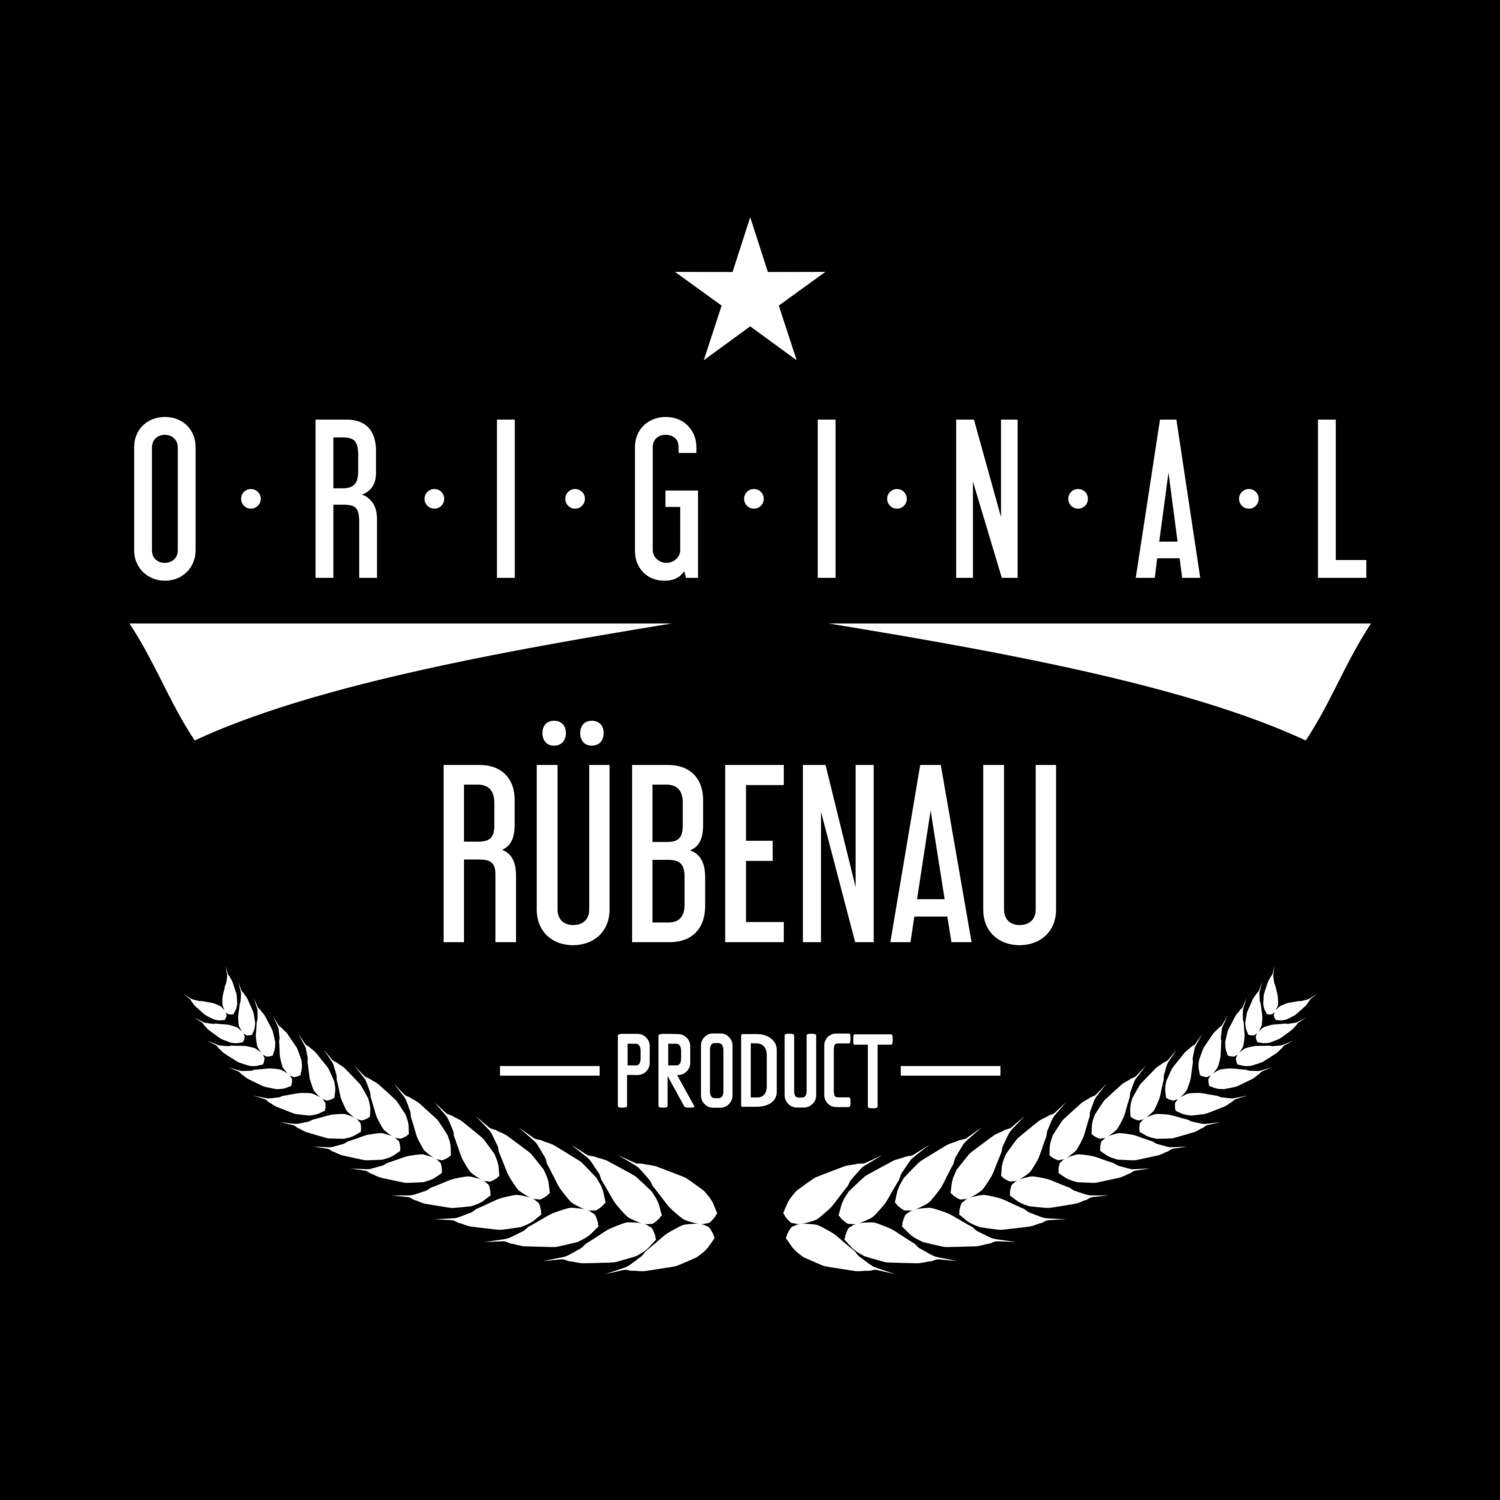 Rübenau T-Shirt »Original Product«